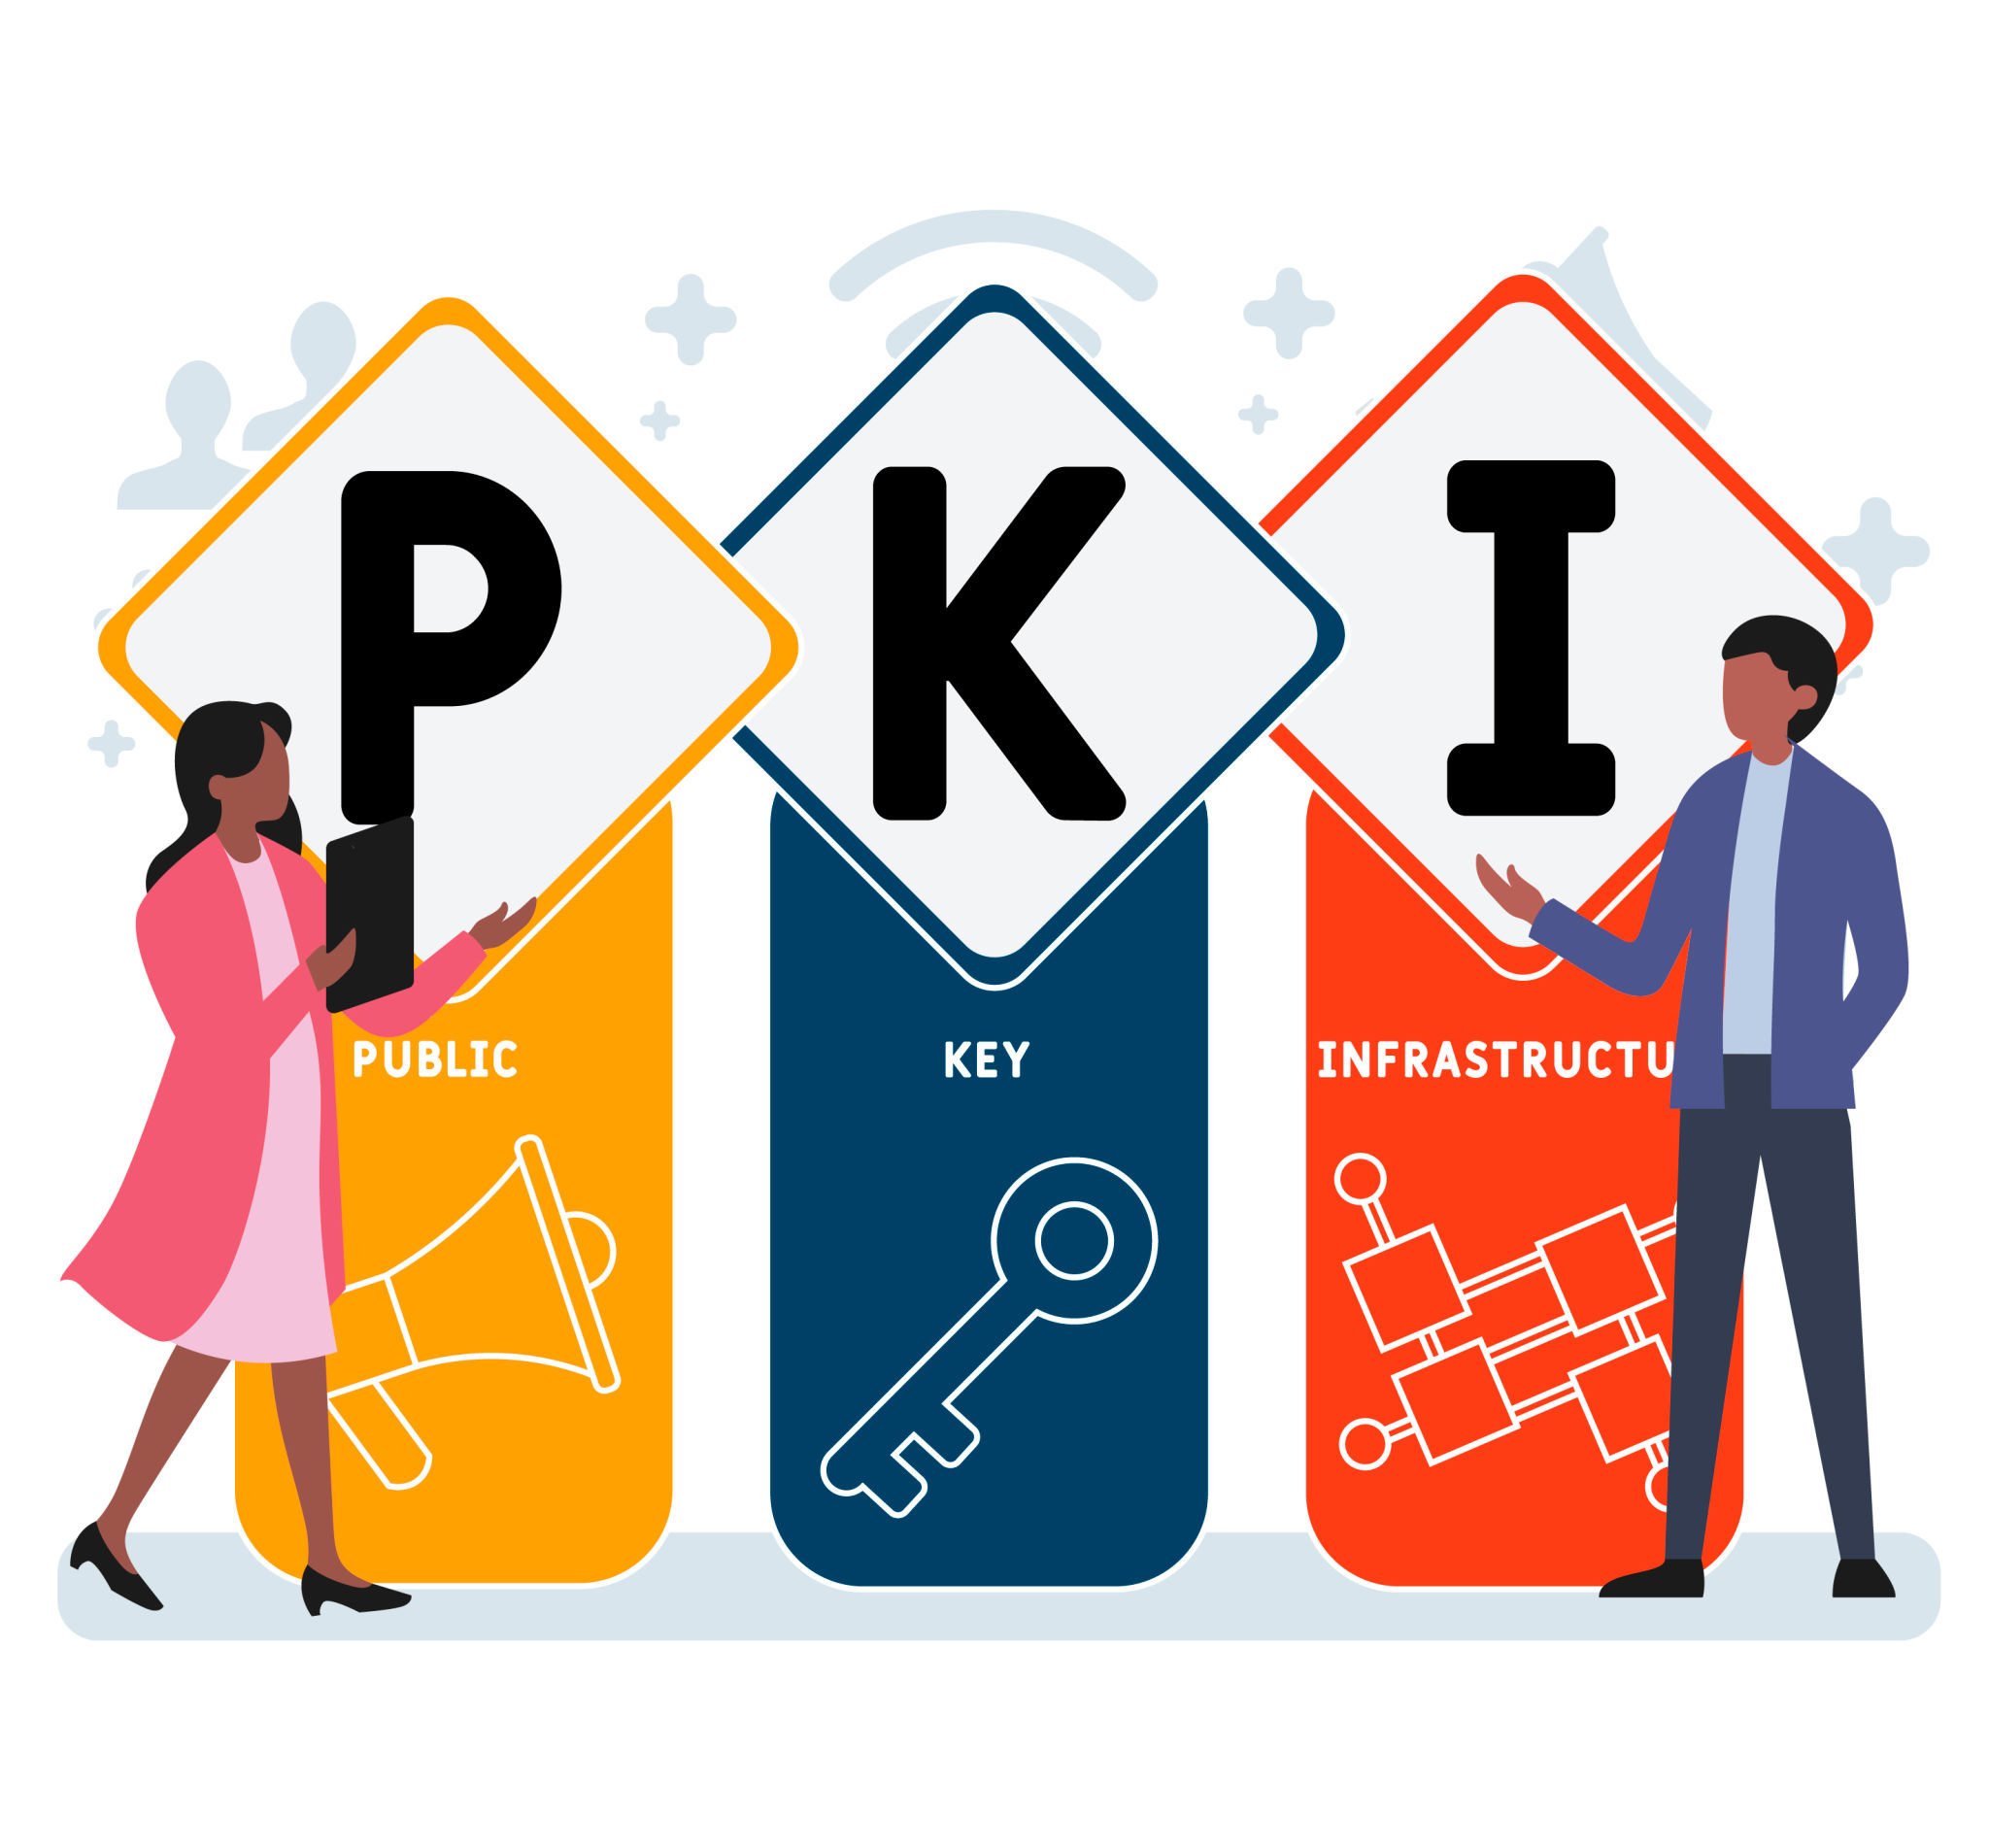 Flat design with people. PKI - Public Key Infrastructure acronym. business concept background. Vector illustration for website banner, marketing materials, business presentation, online advertising